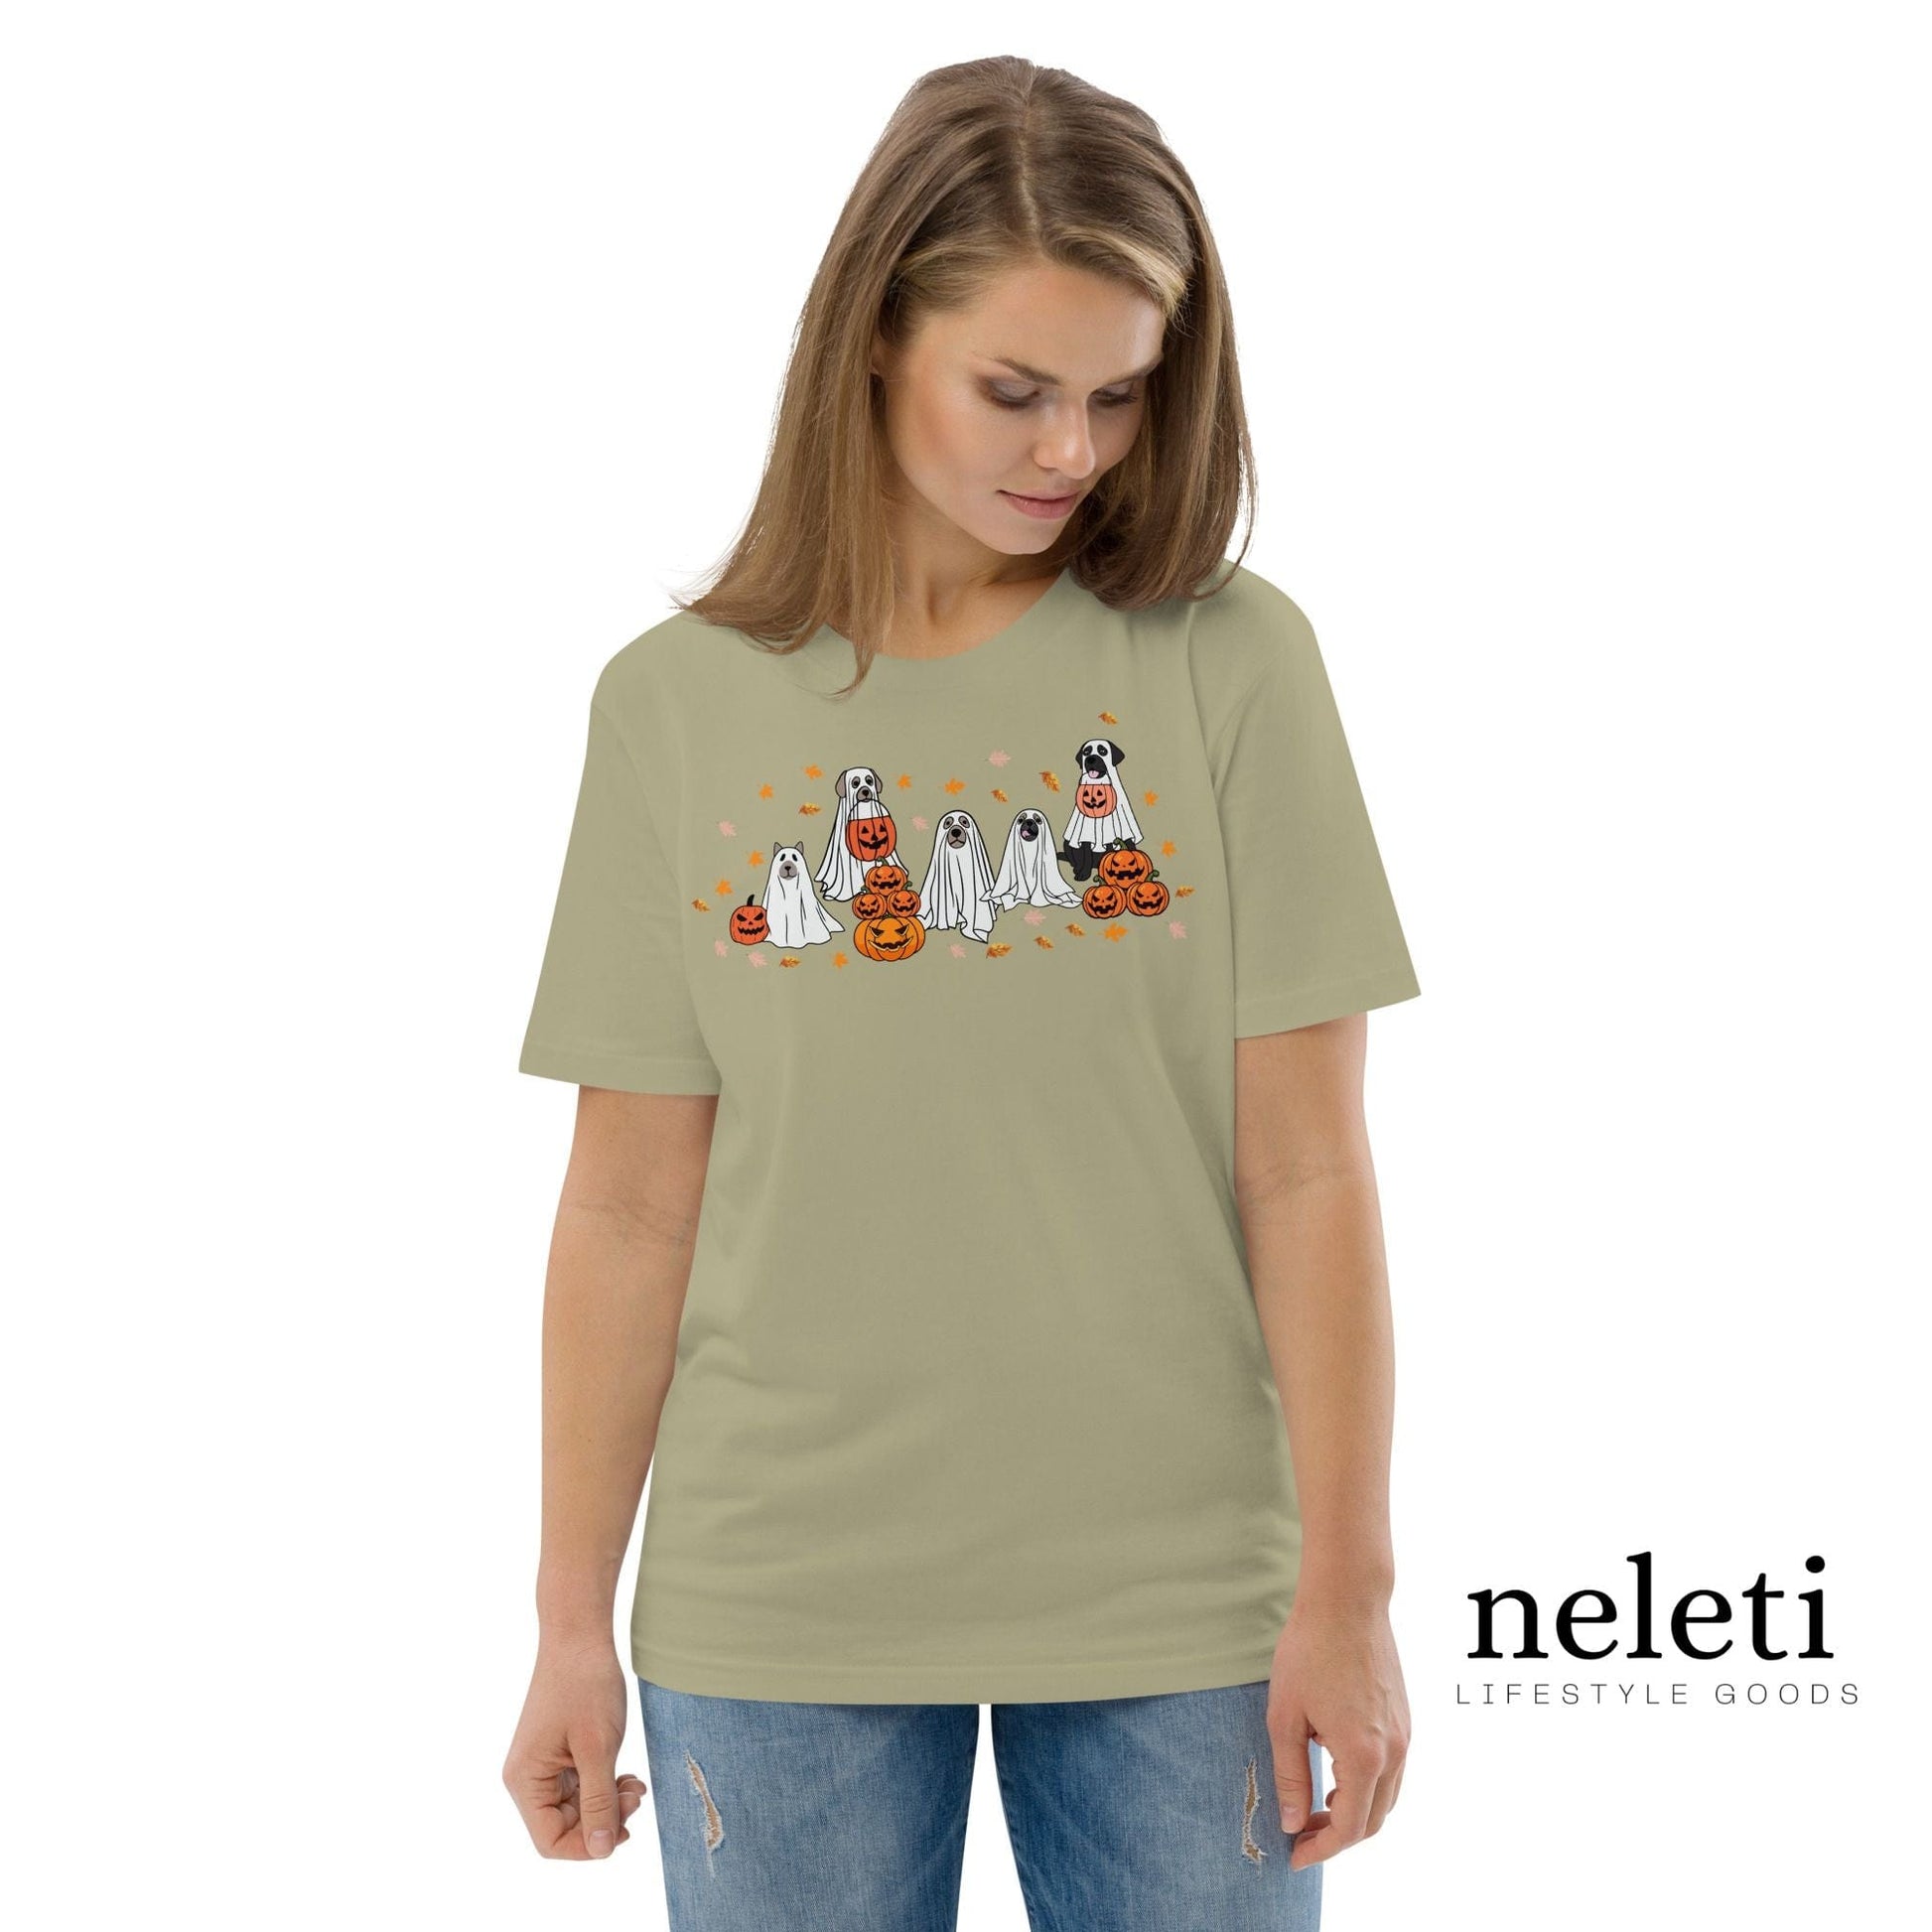 neleti.com-haloween-olive-shirt-for-dog-lovers